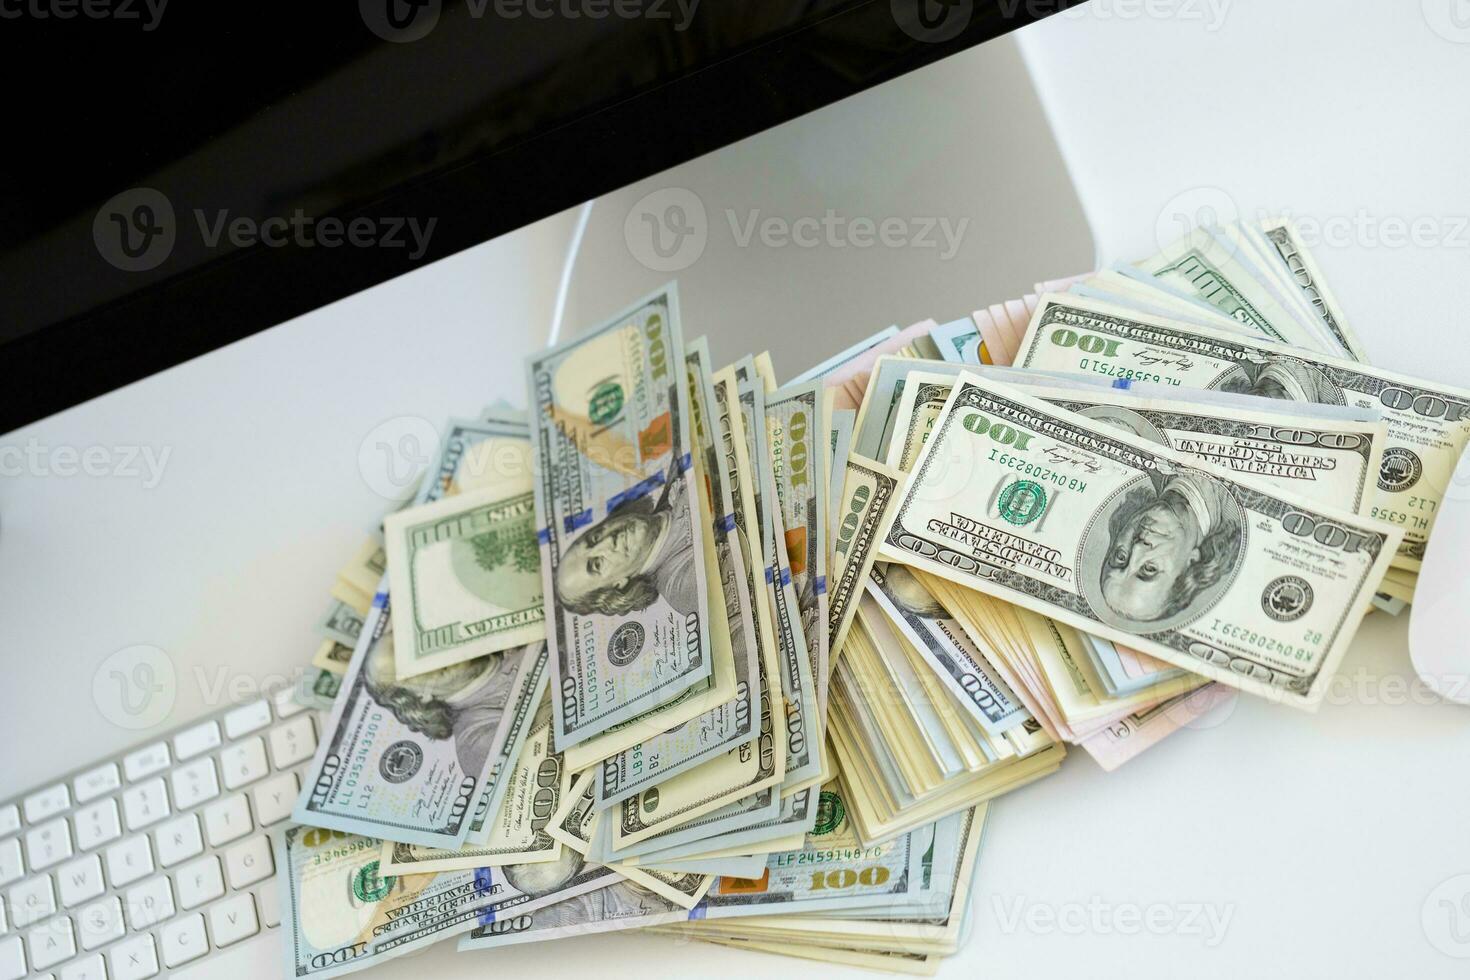 Dollar bills on the white computer keyboard photo